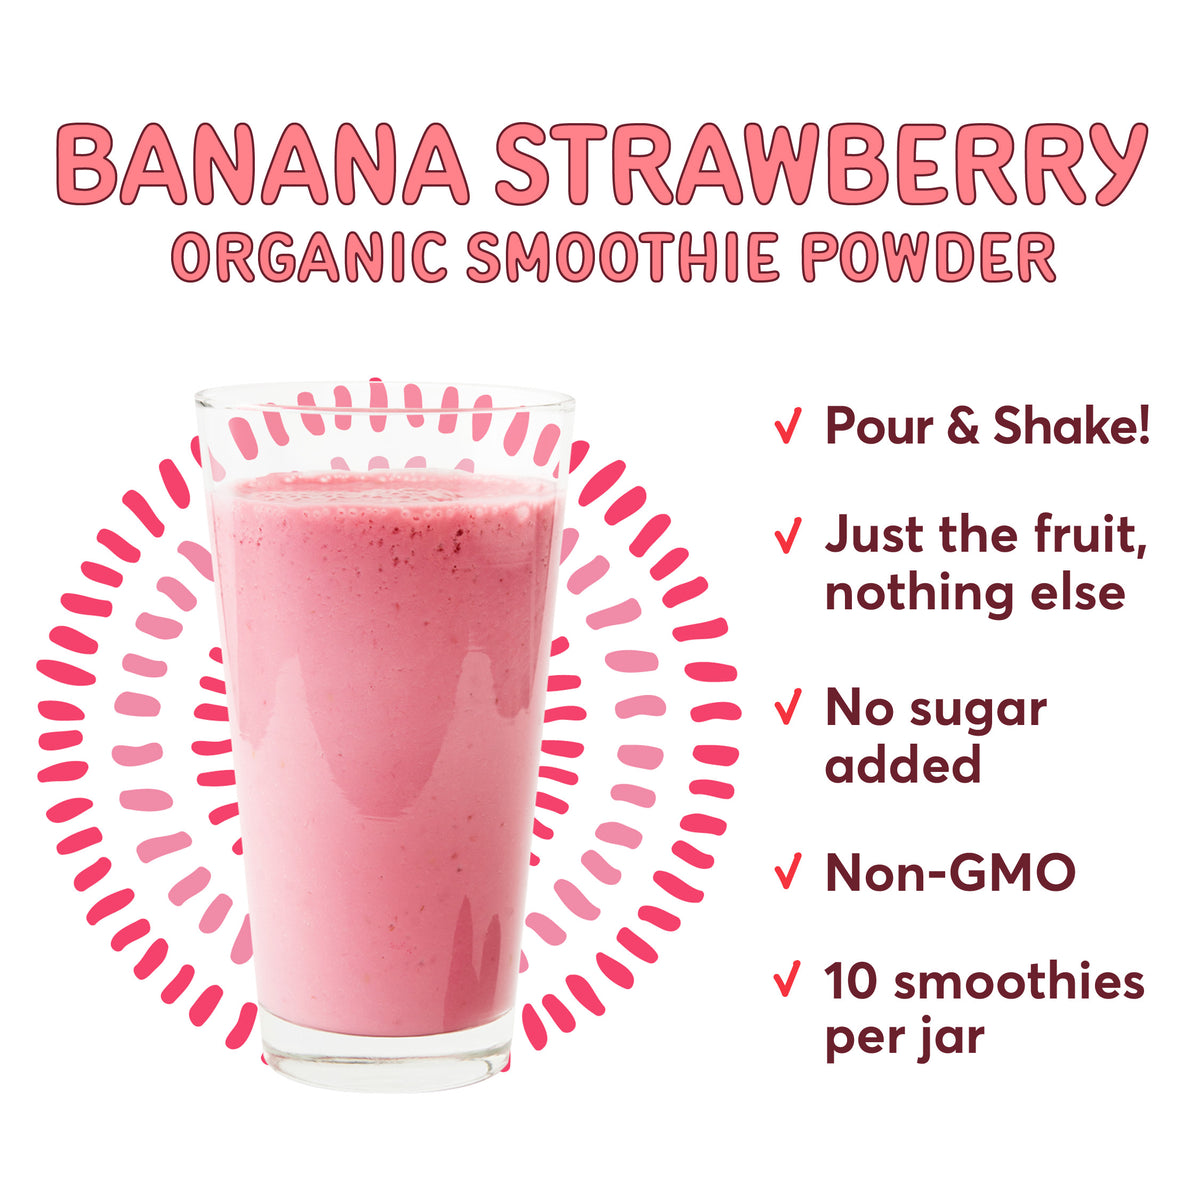 Banana Strawberry Organic Smoothie